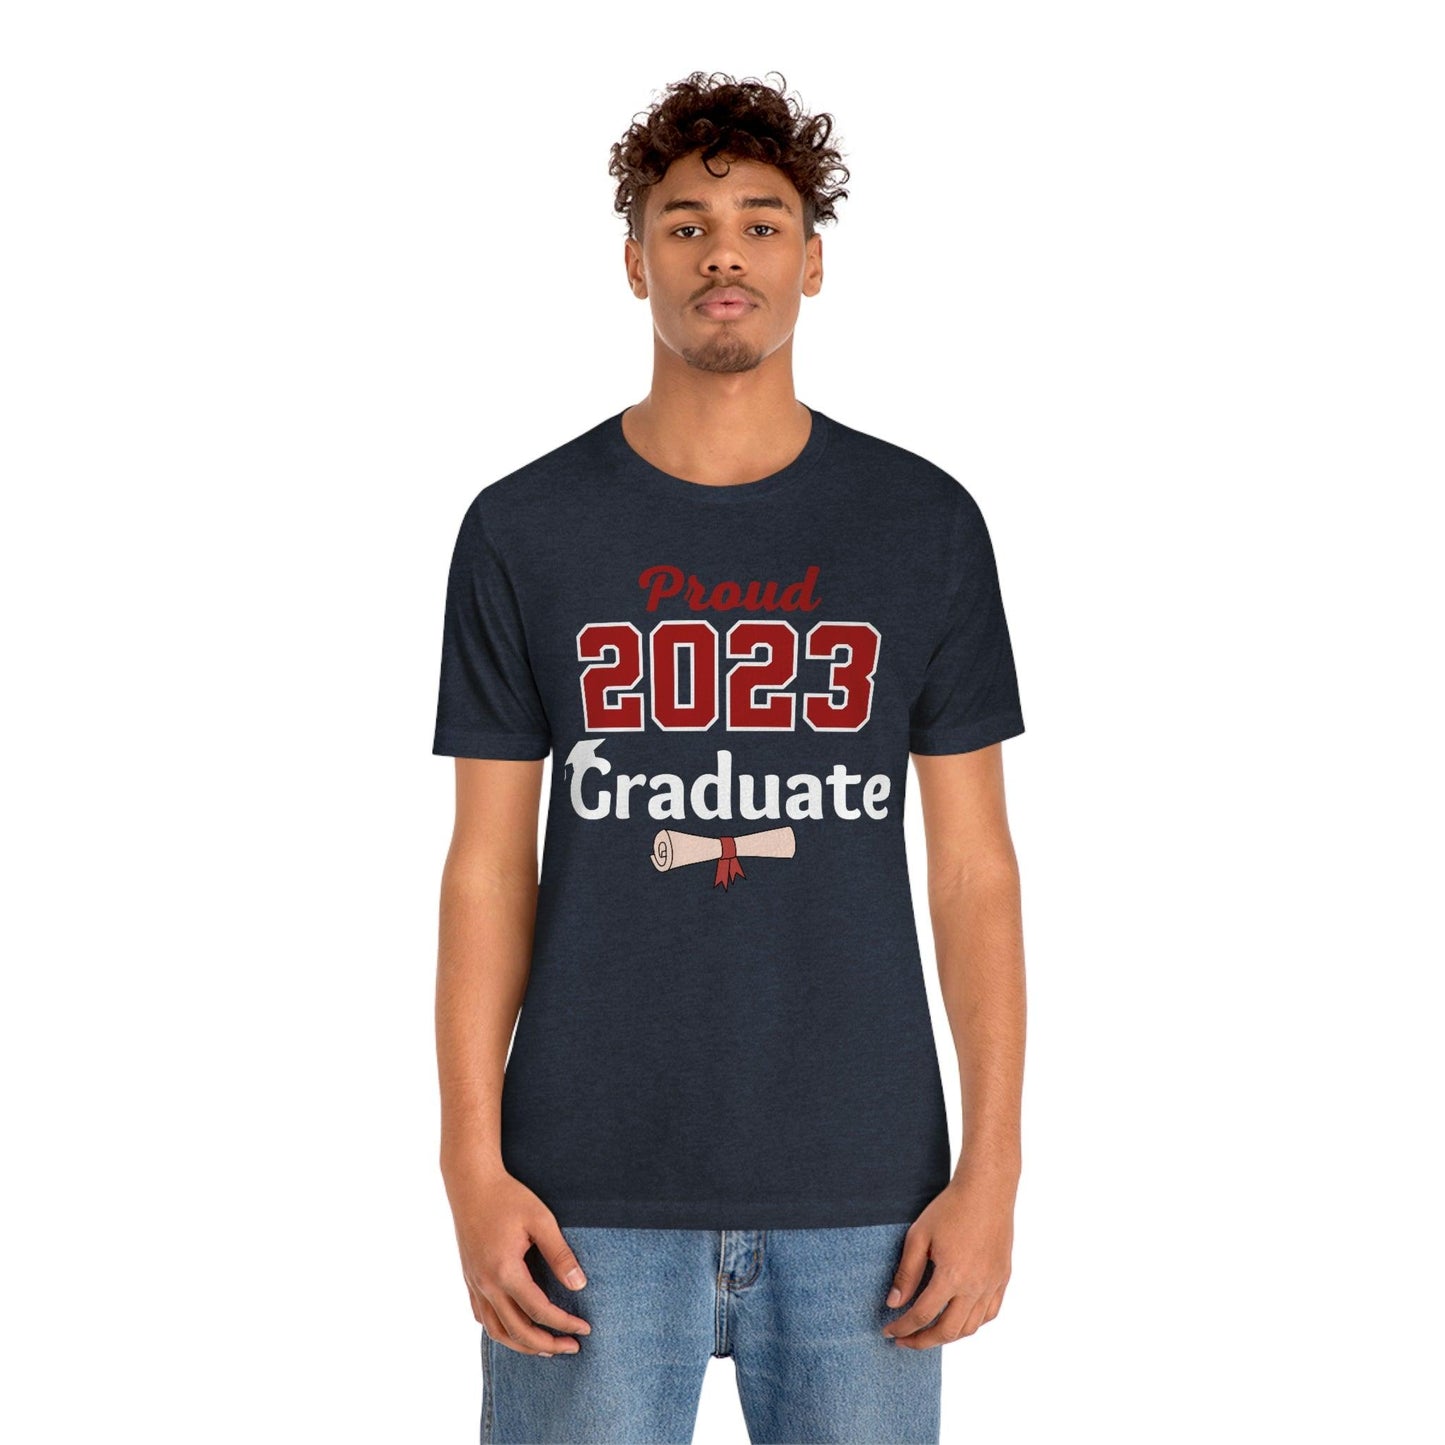 Proud 2023 graduate - Graduate shirt - Graduation shirt - Graduation gift - Giftsmojo